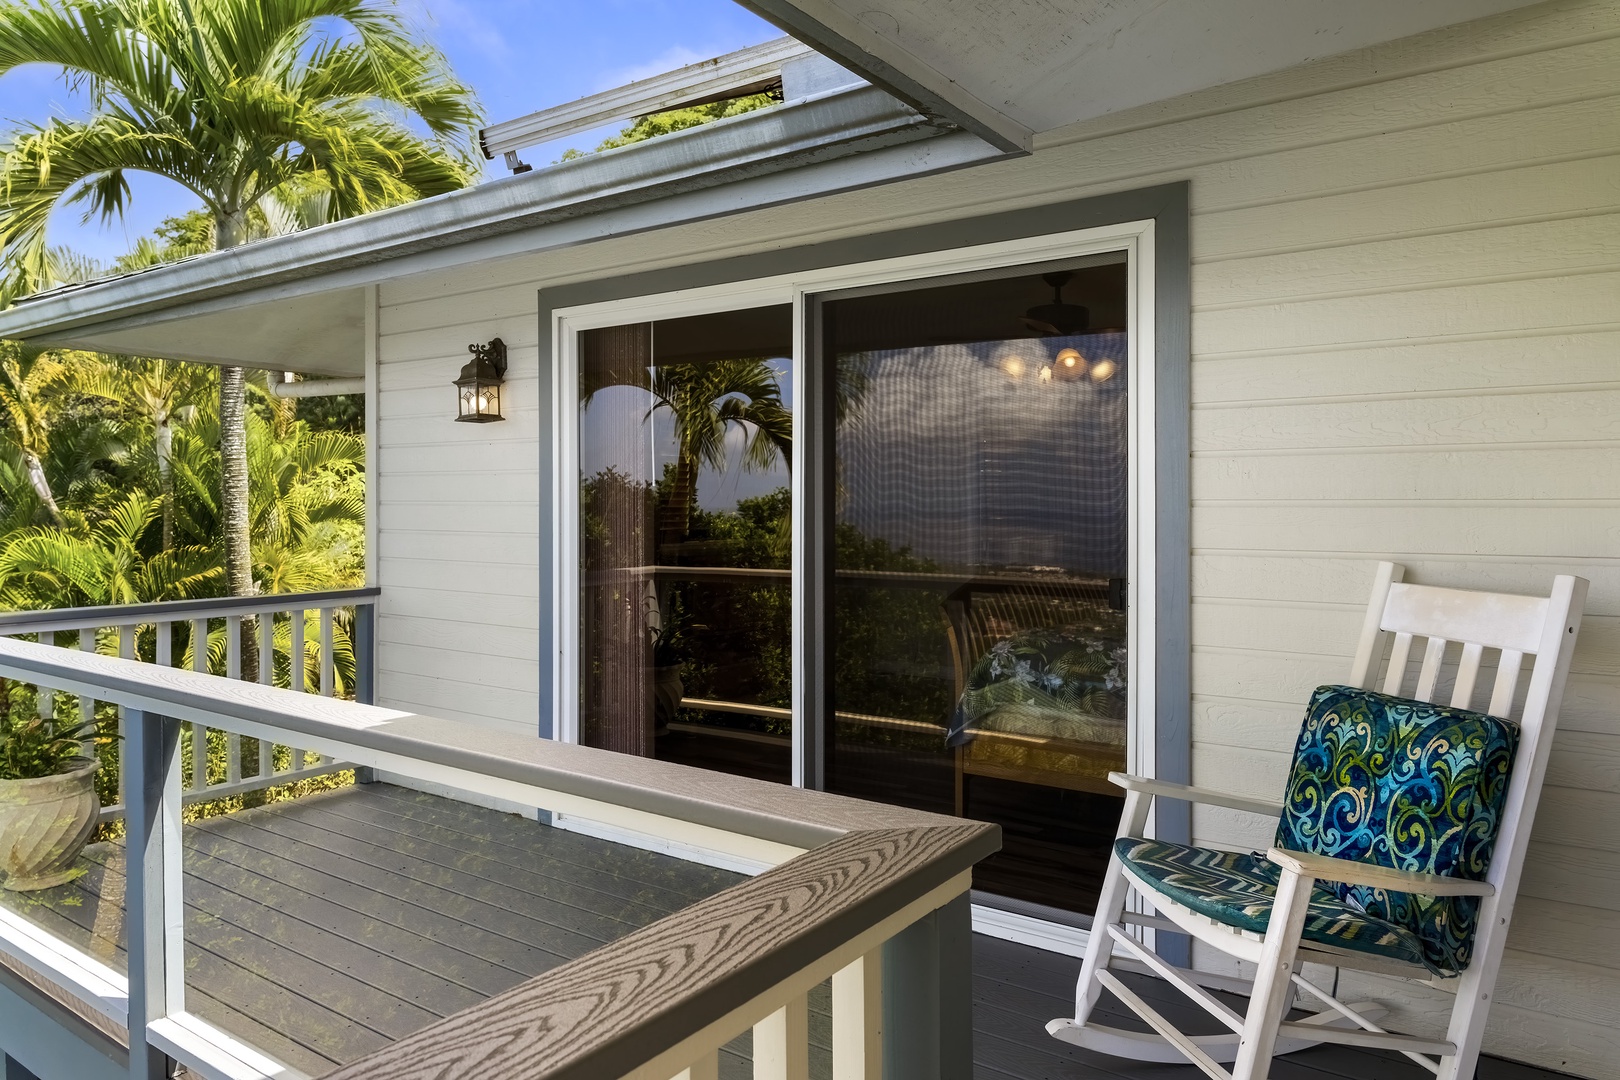 Kailua Kona Vacation Rentals, Honu O Kai (Turtle of the Sea) - Primary bedroom with Lanai access